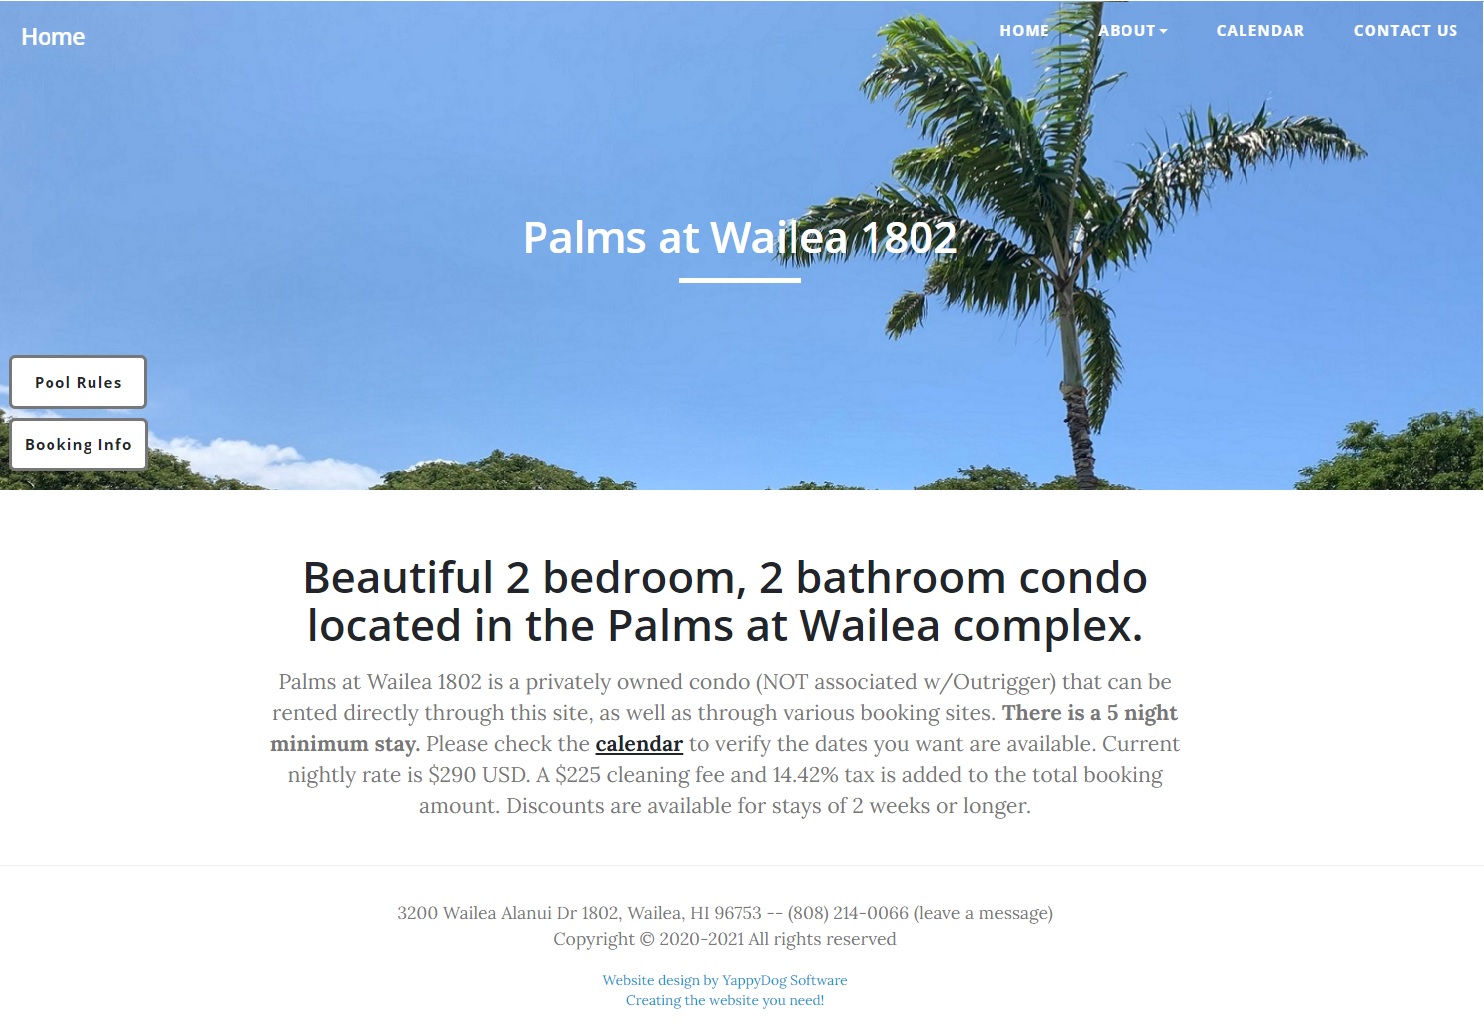 Palms at Wailea 1802